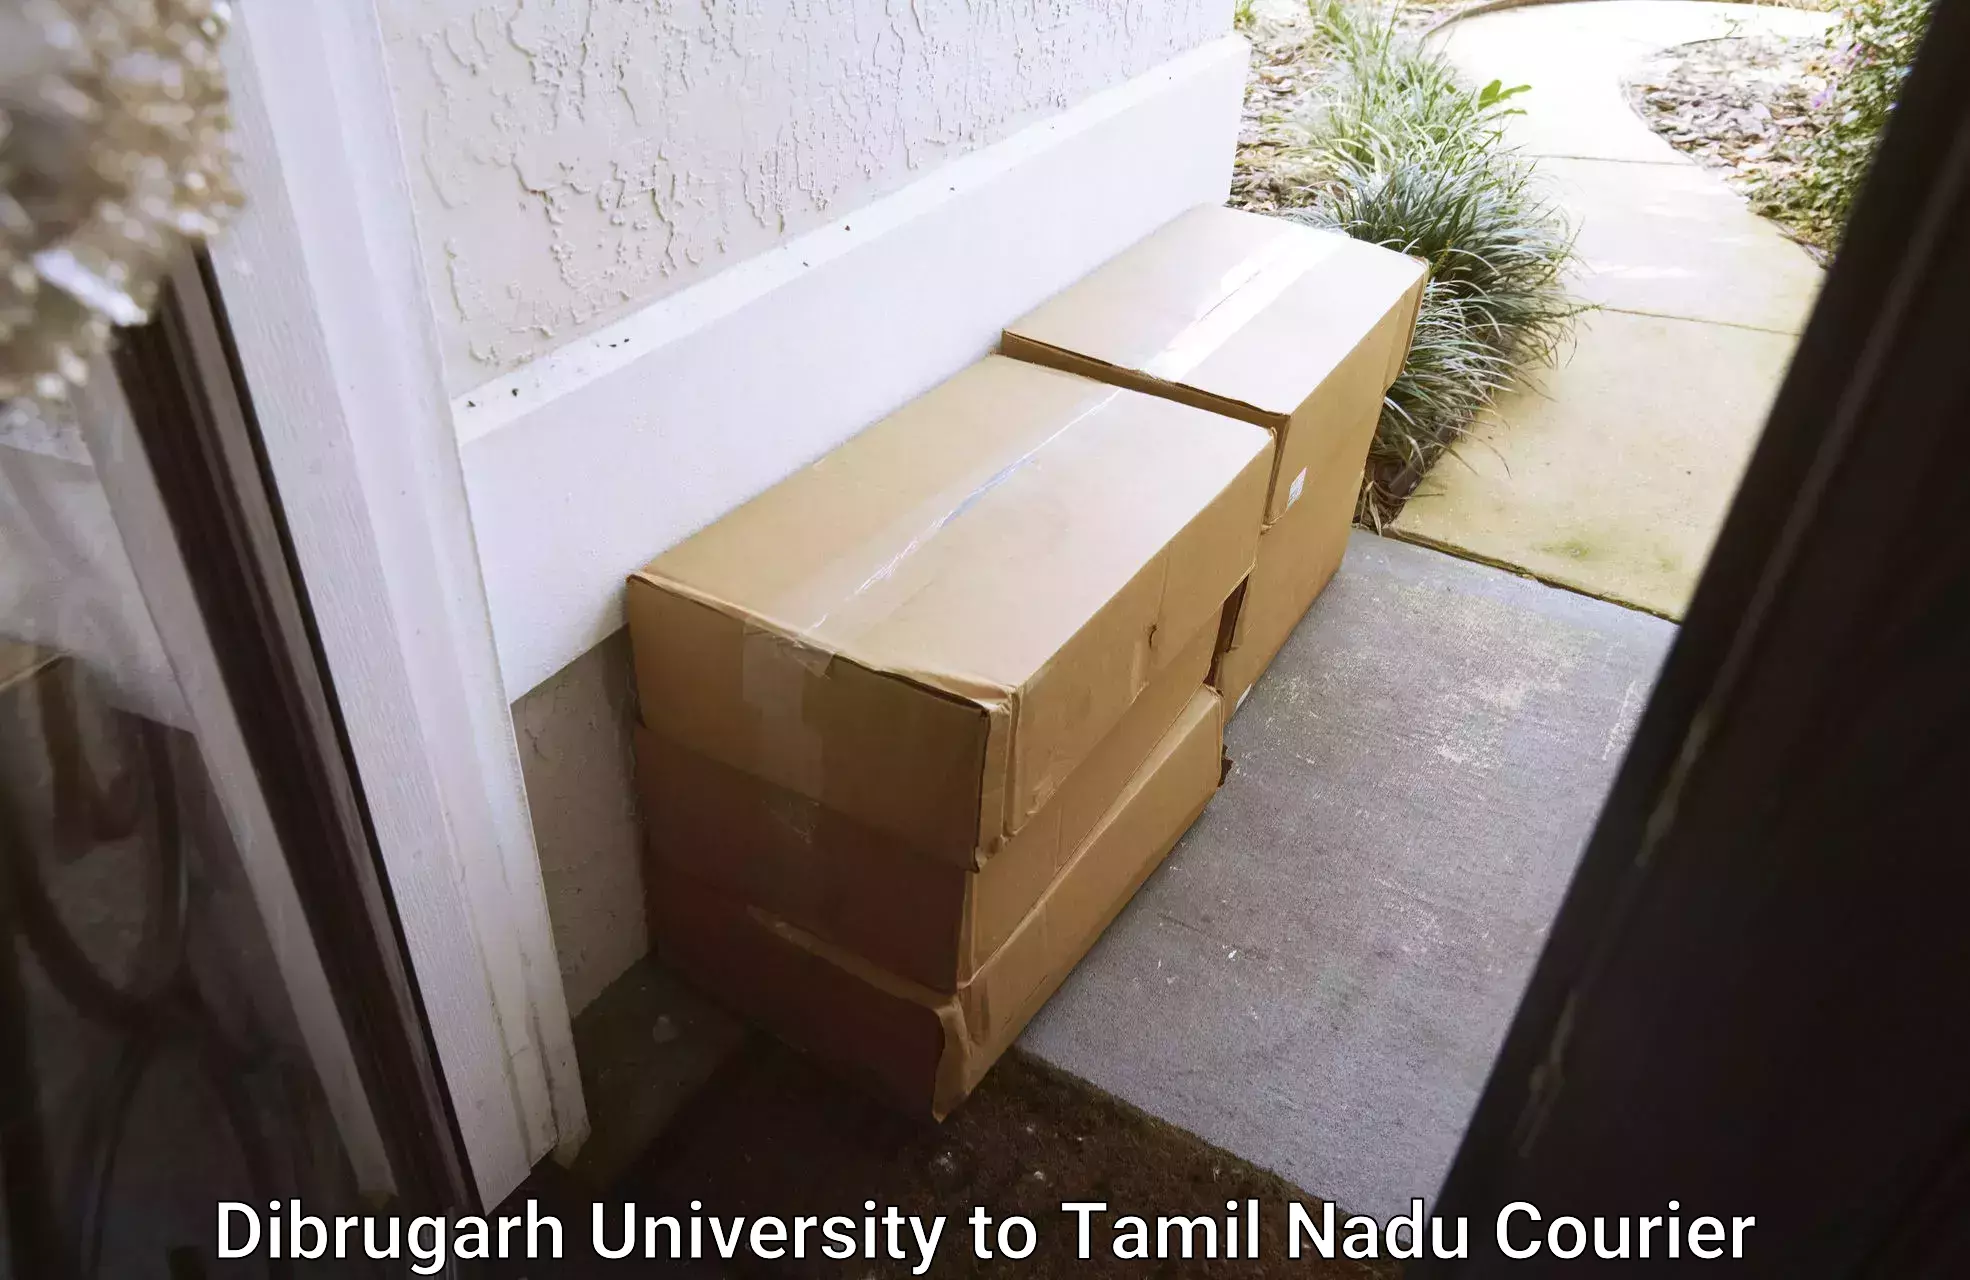 Bulk courier orders Dibrugarh University to Ennore Port Chennai